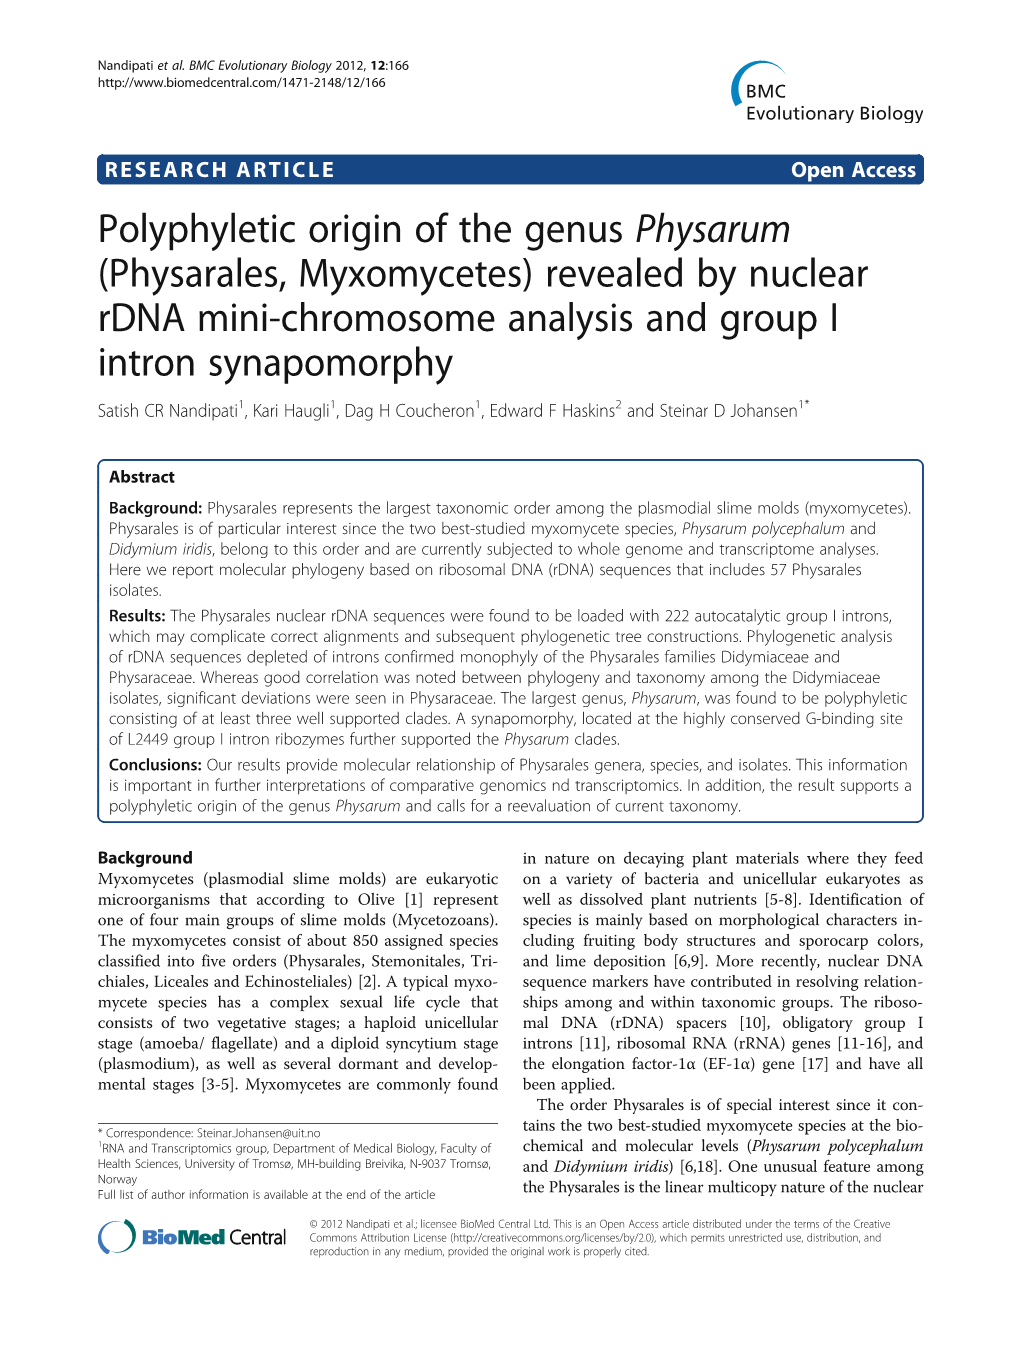 Polyphyletic Origin of the Genus Physarum (Physarales